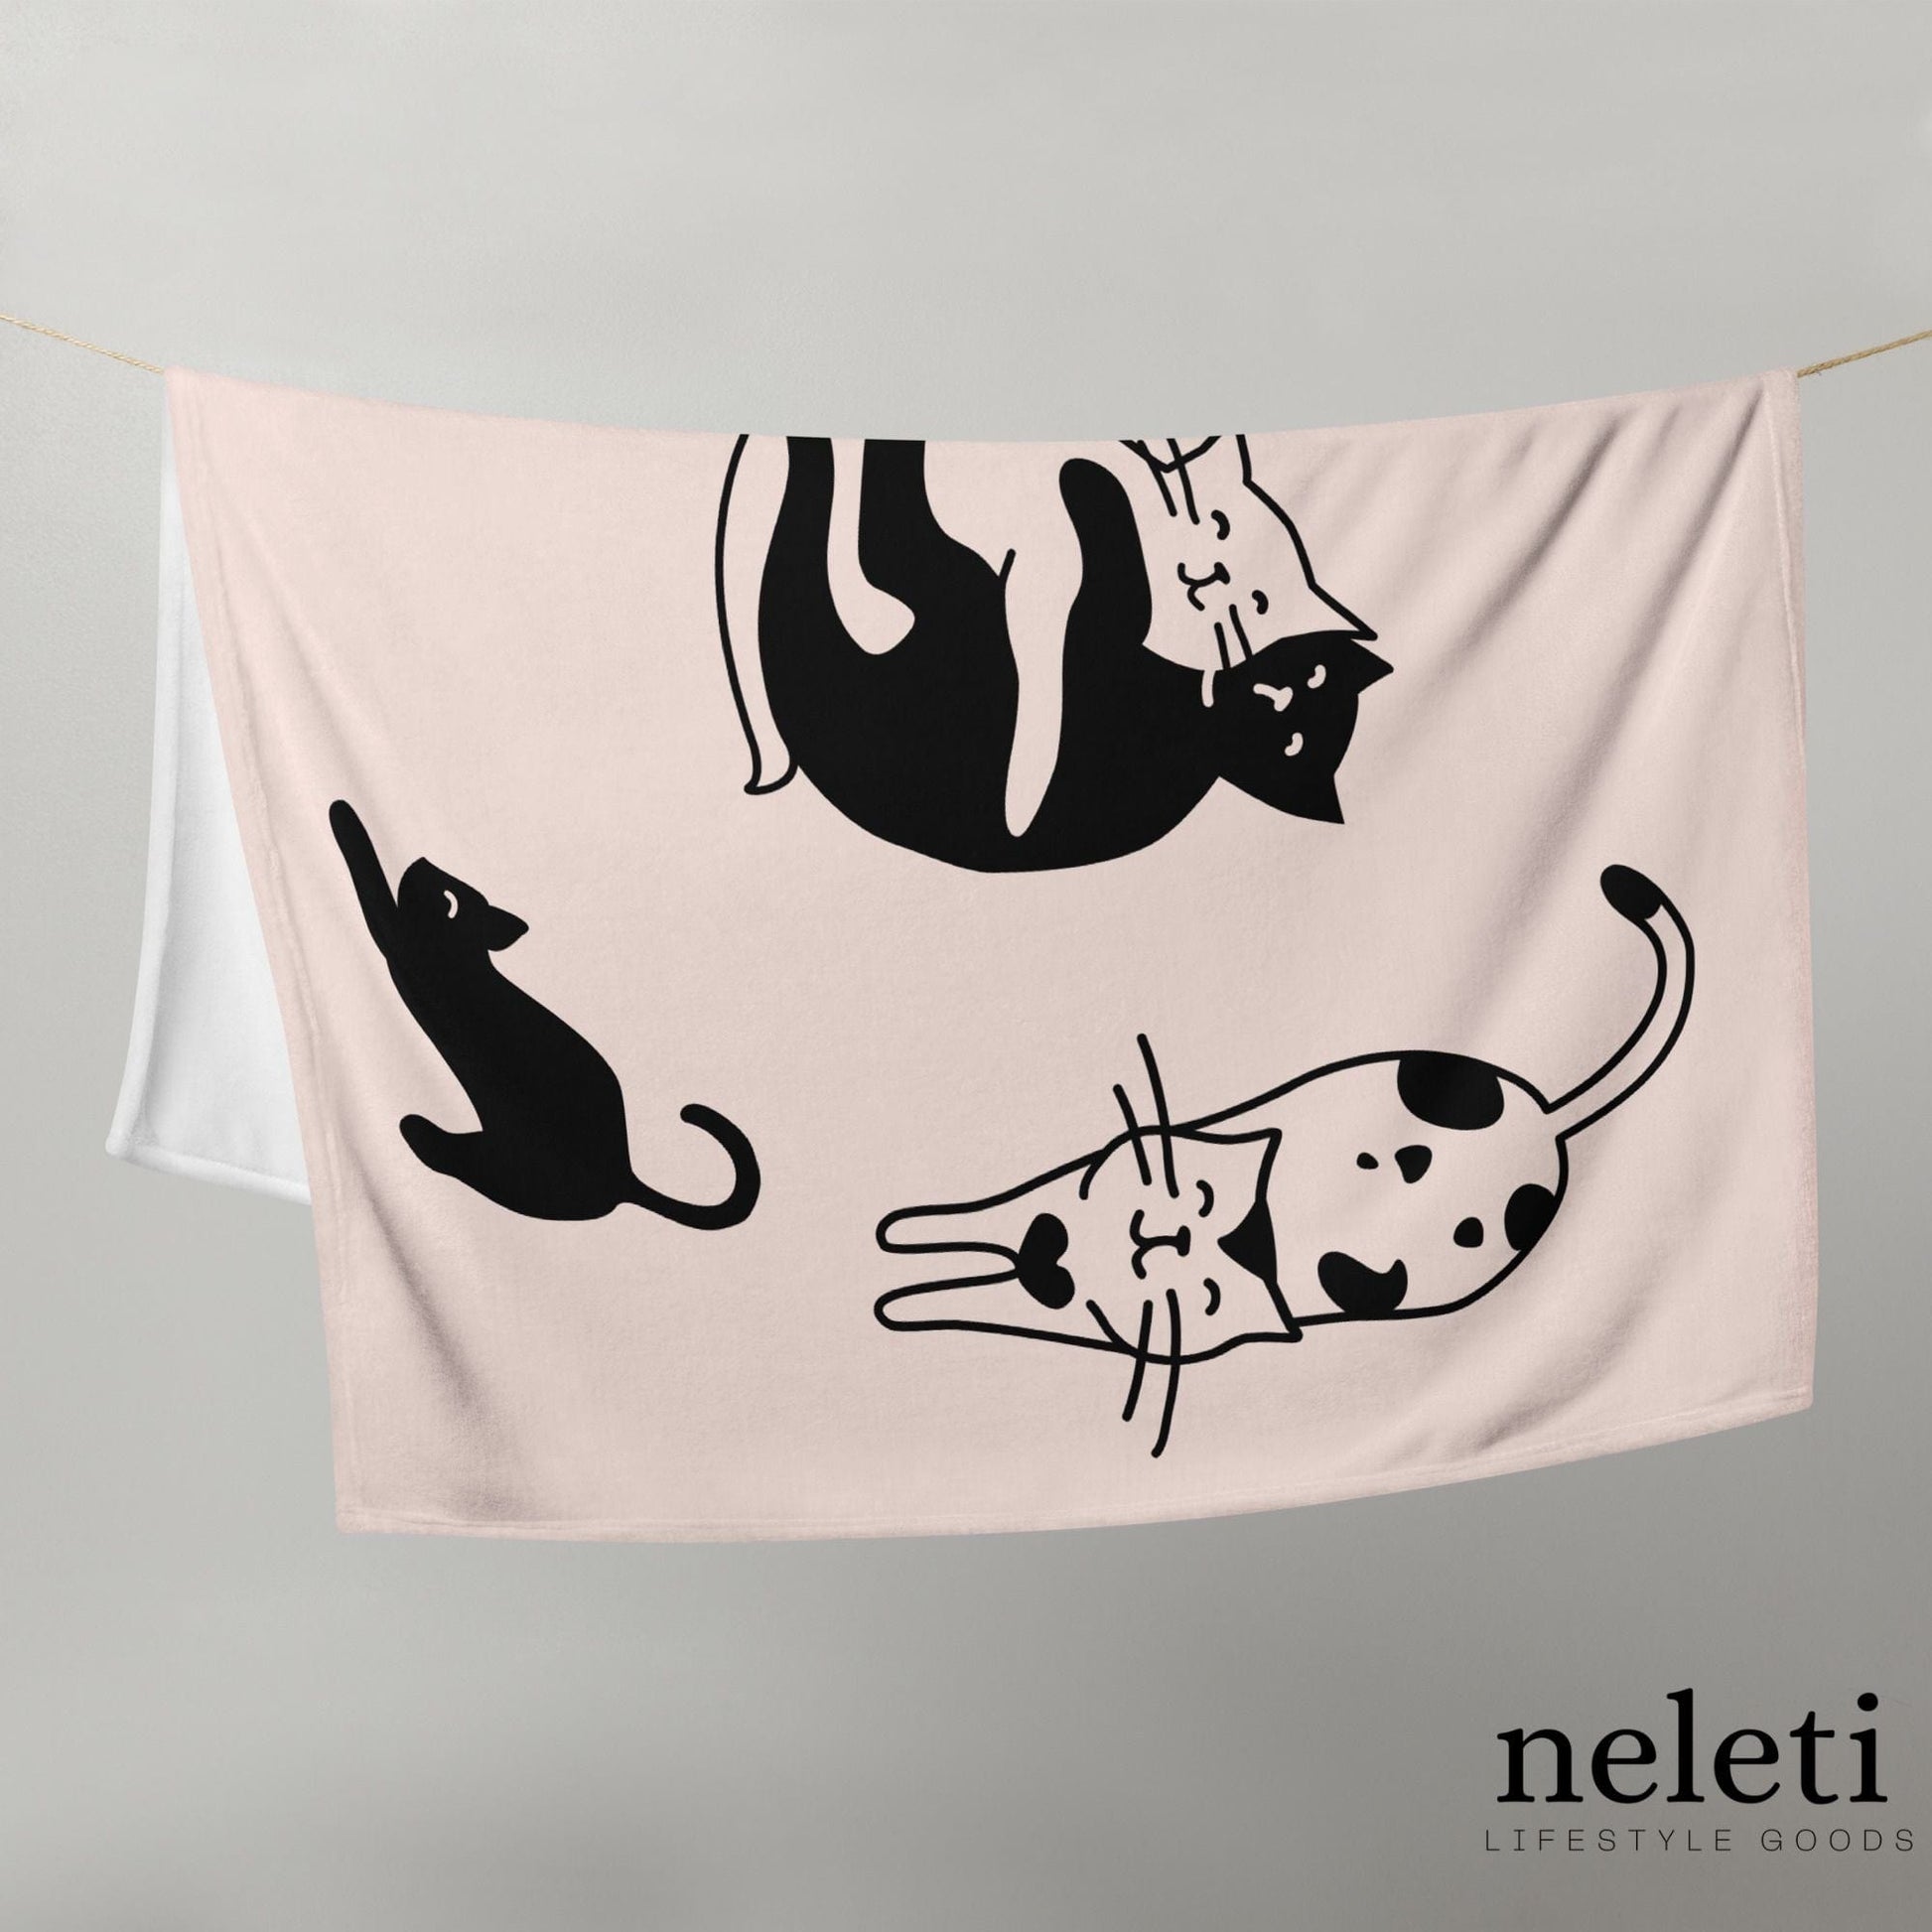 neleti.com-cat-blanket-in-wisp-pink-color